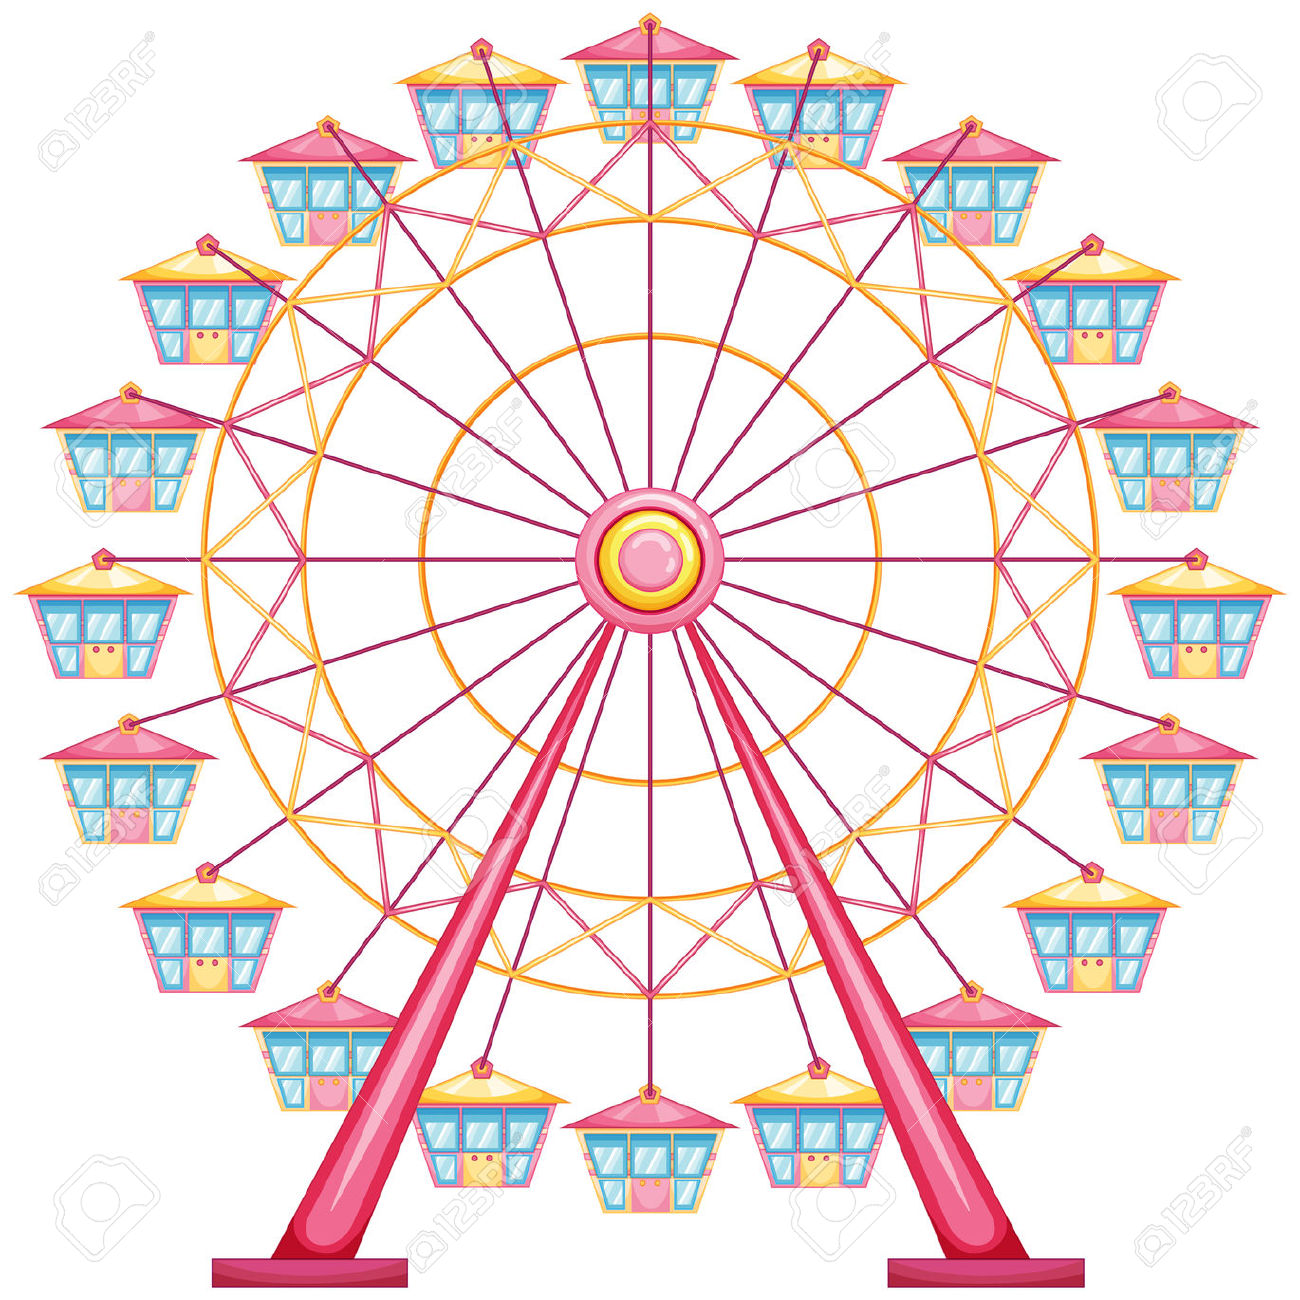 Ferris wheel clipart 2 - Ferris Wheel Clip Art